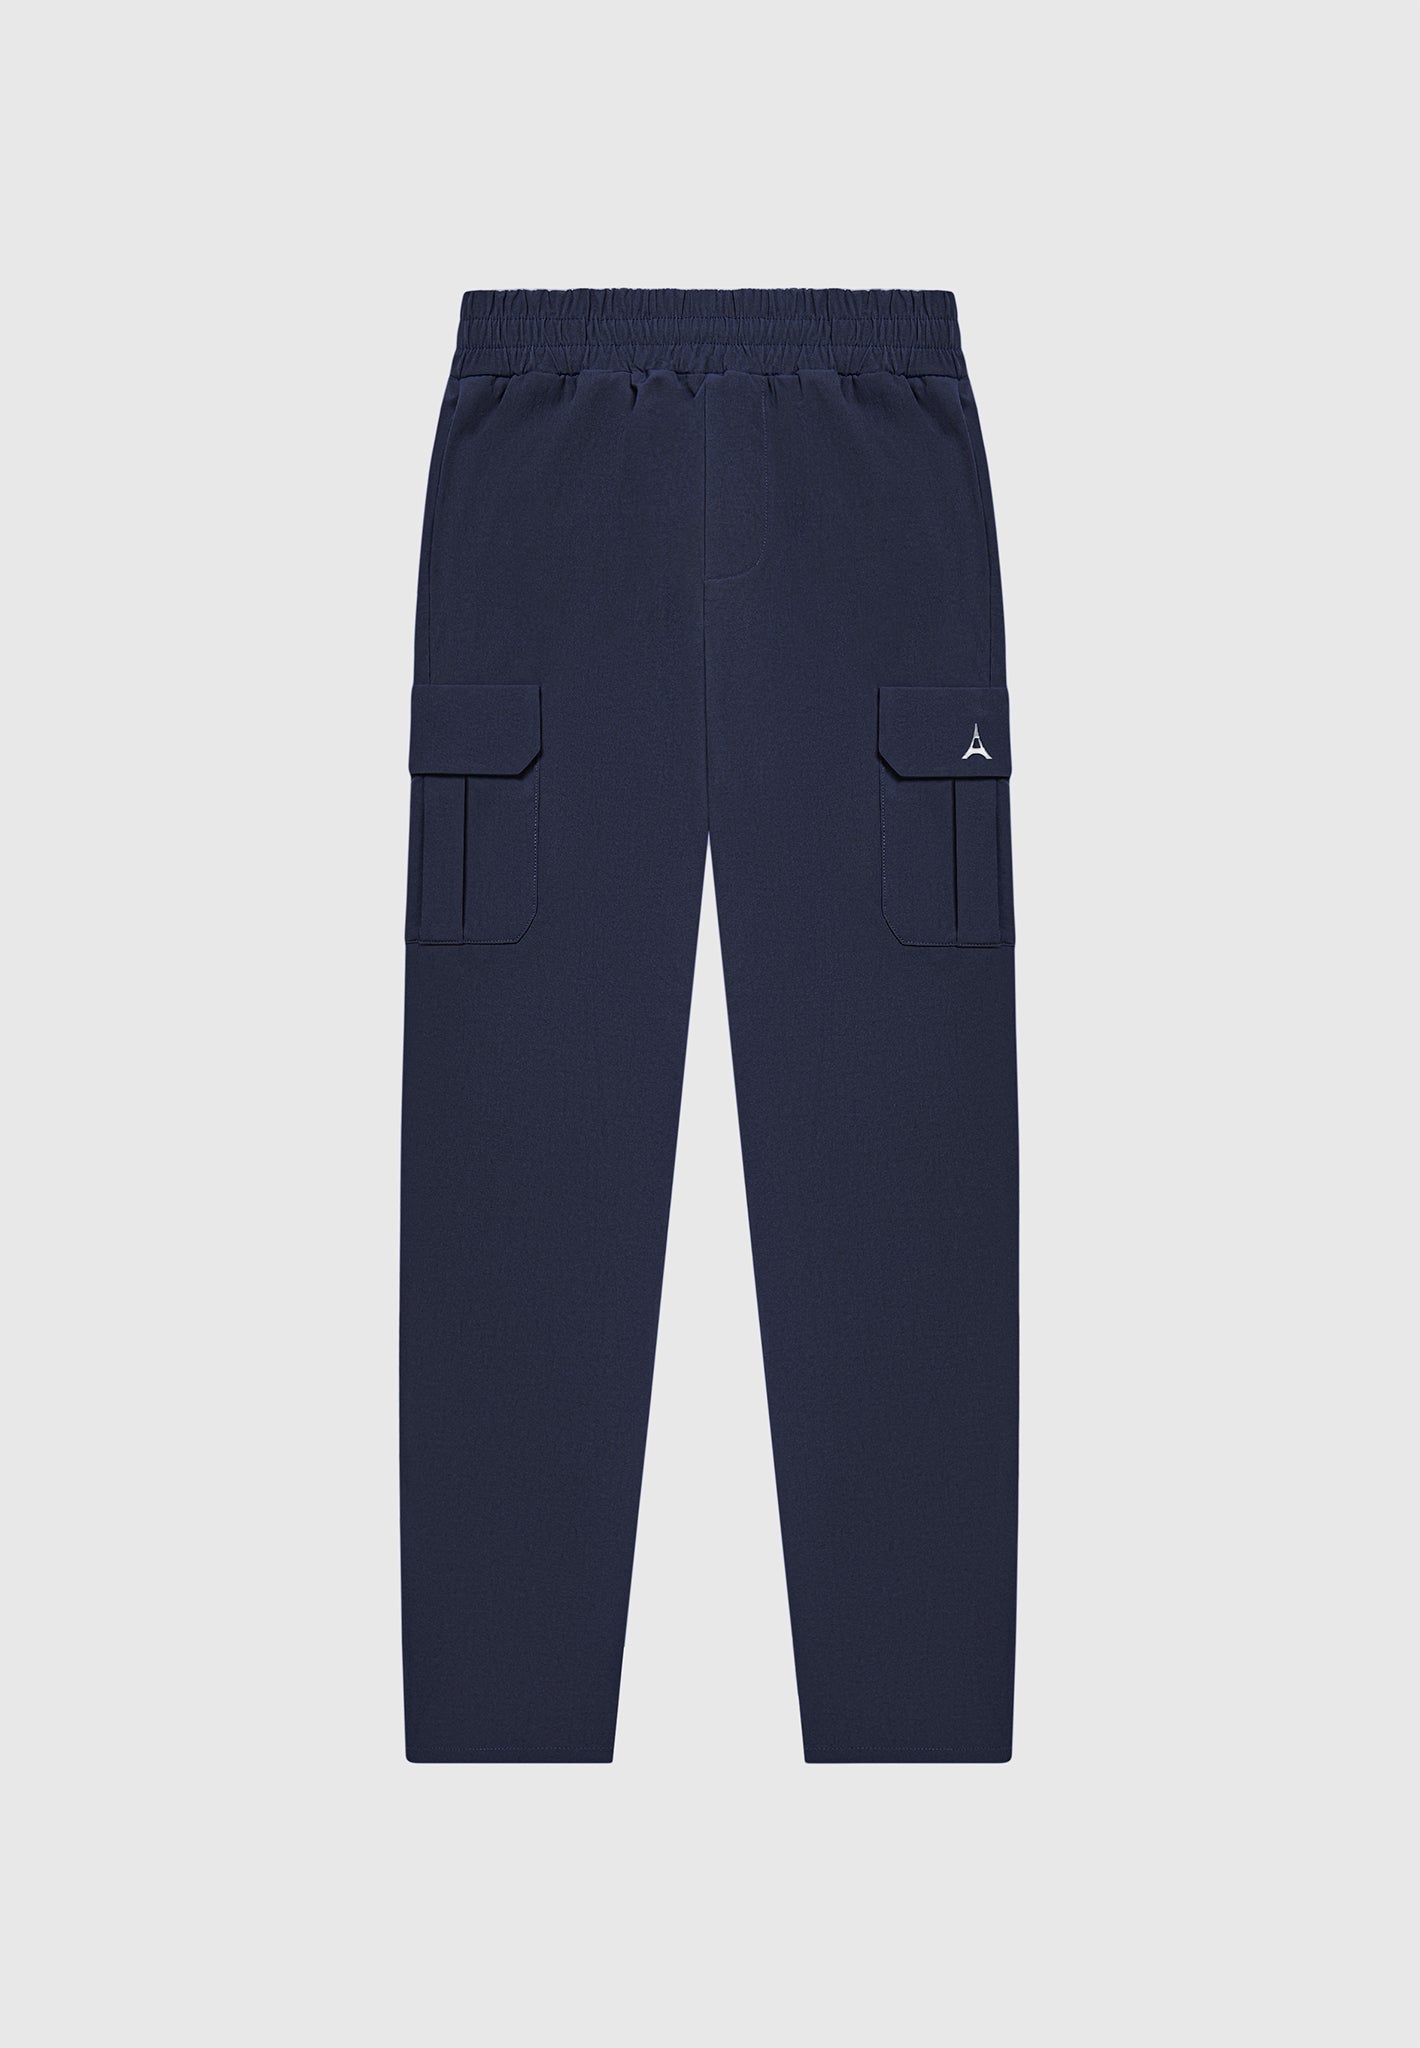 Reell Flex Cargo LC - Casual Trousers Men's | Buy online | Alpinetrek.co.uk